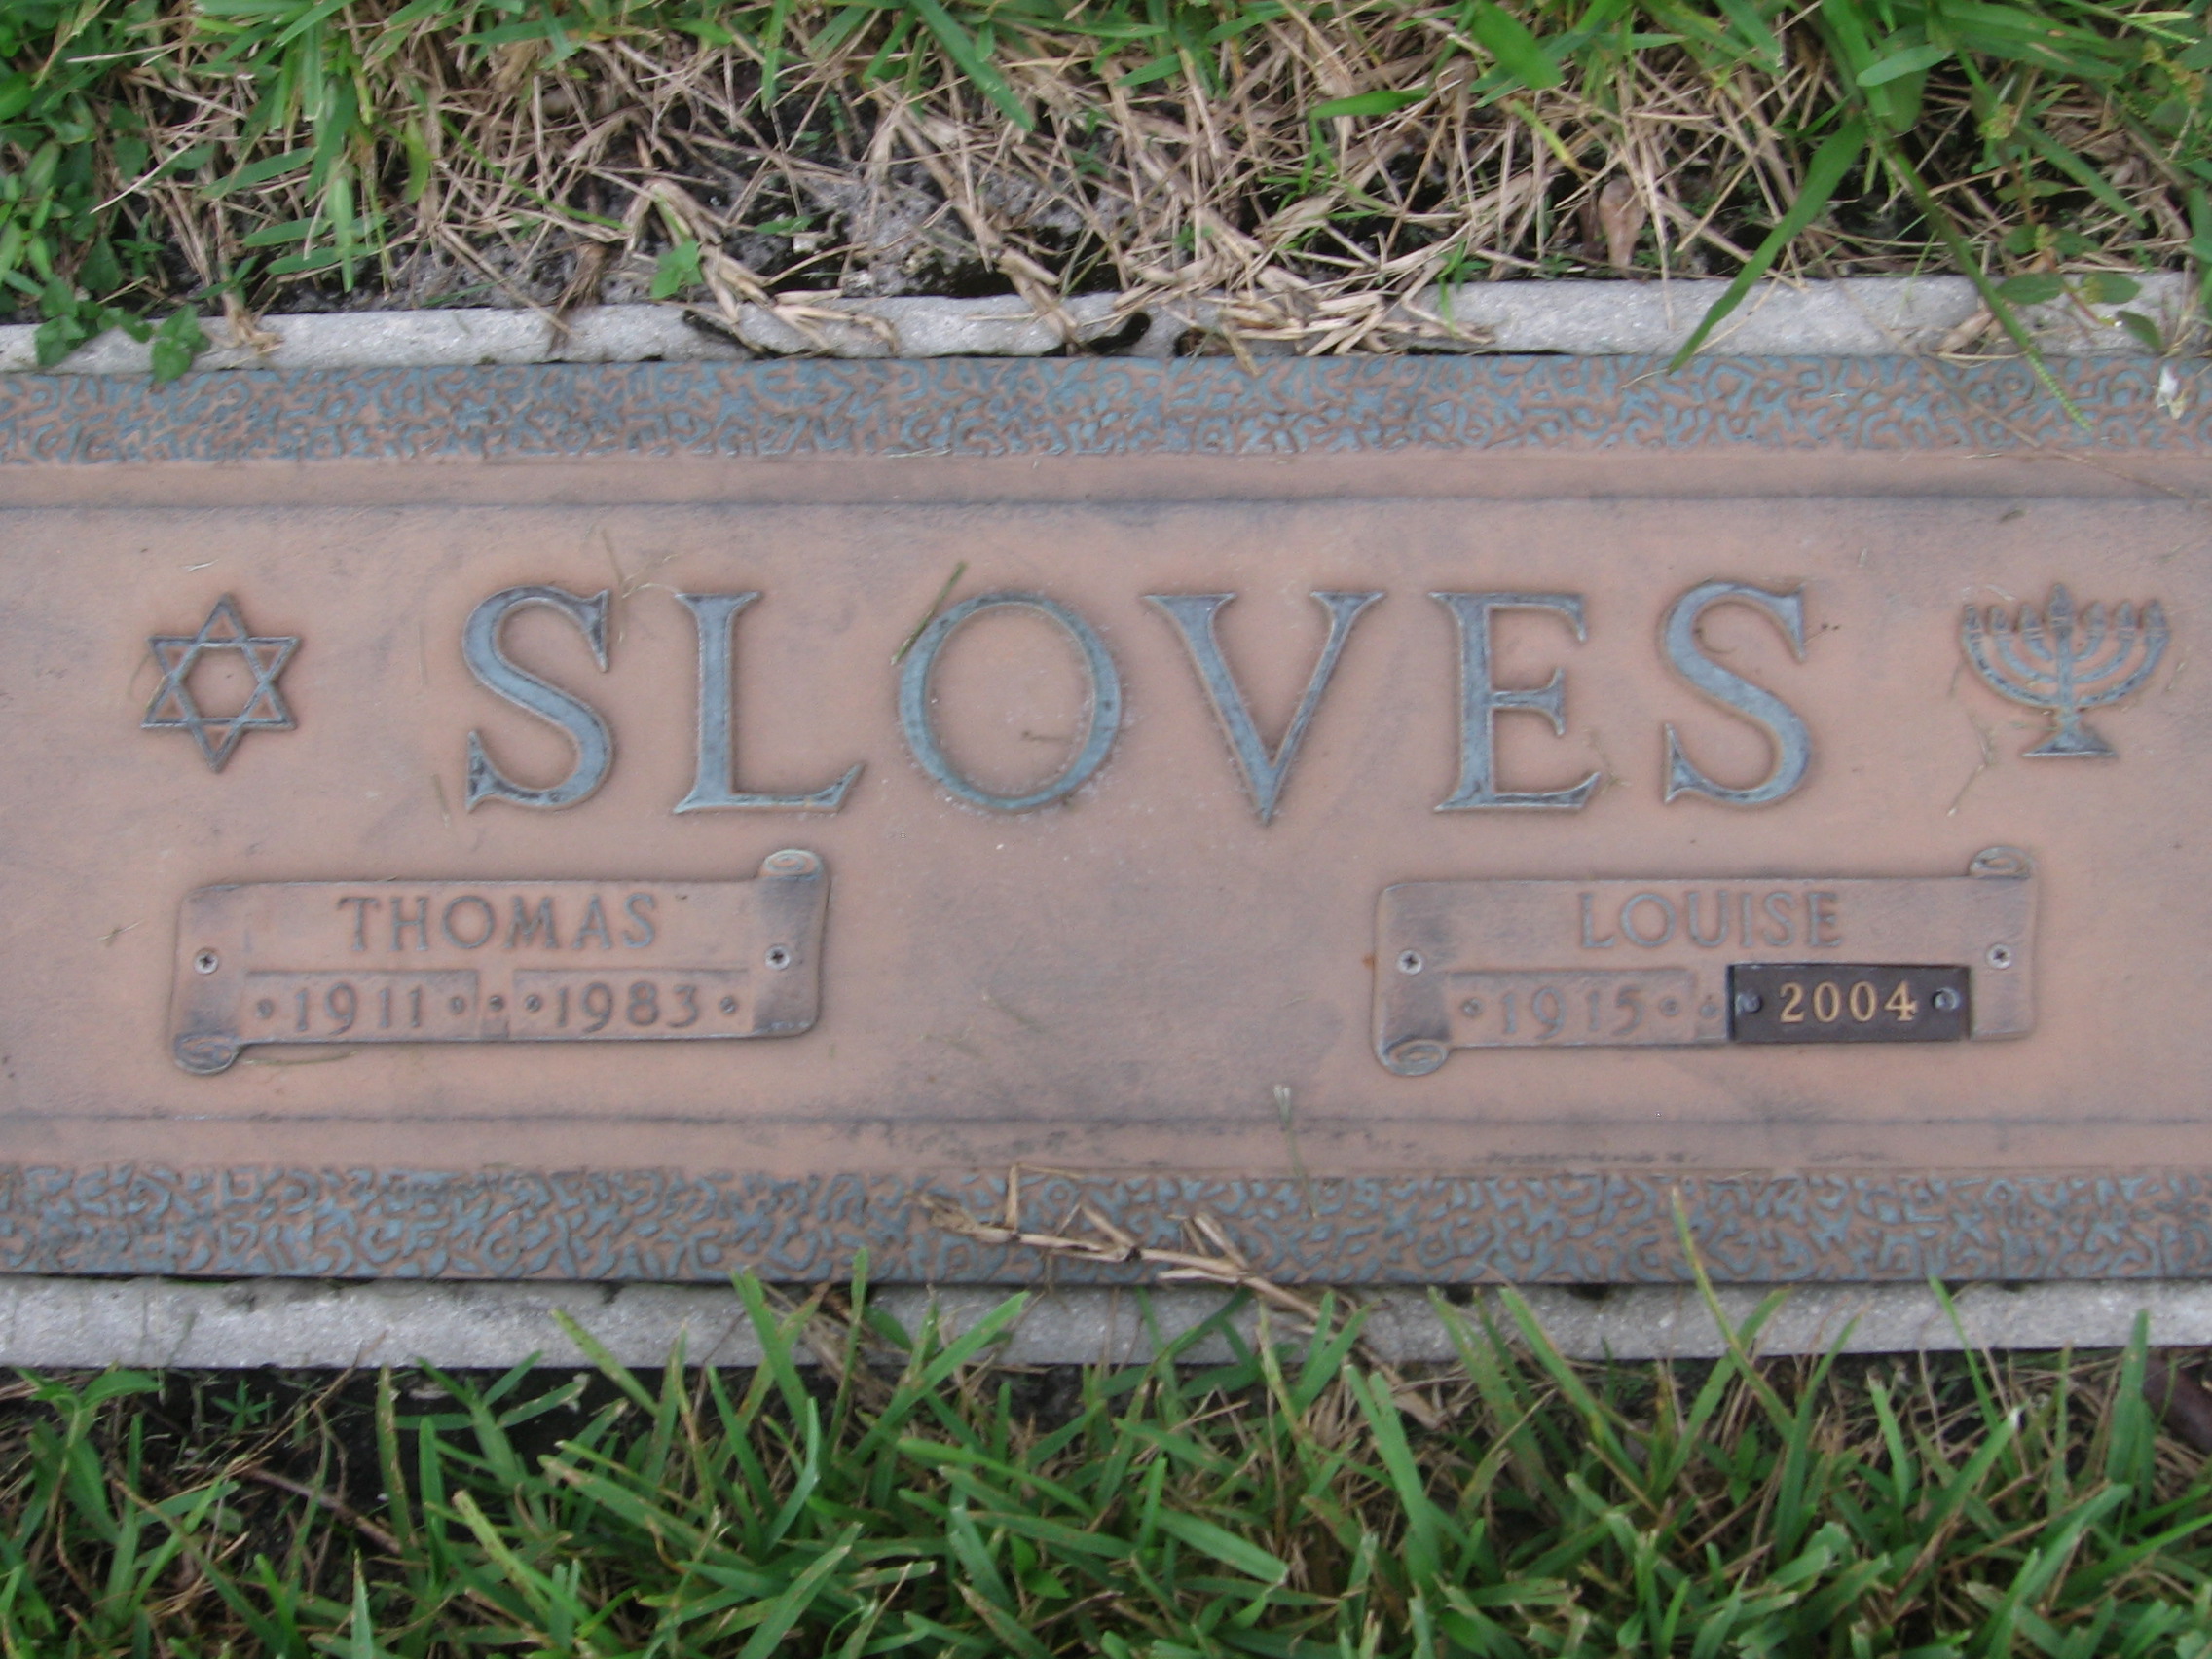 Thomas Sloves